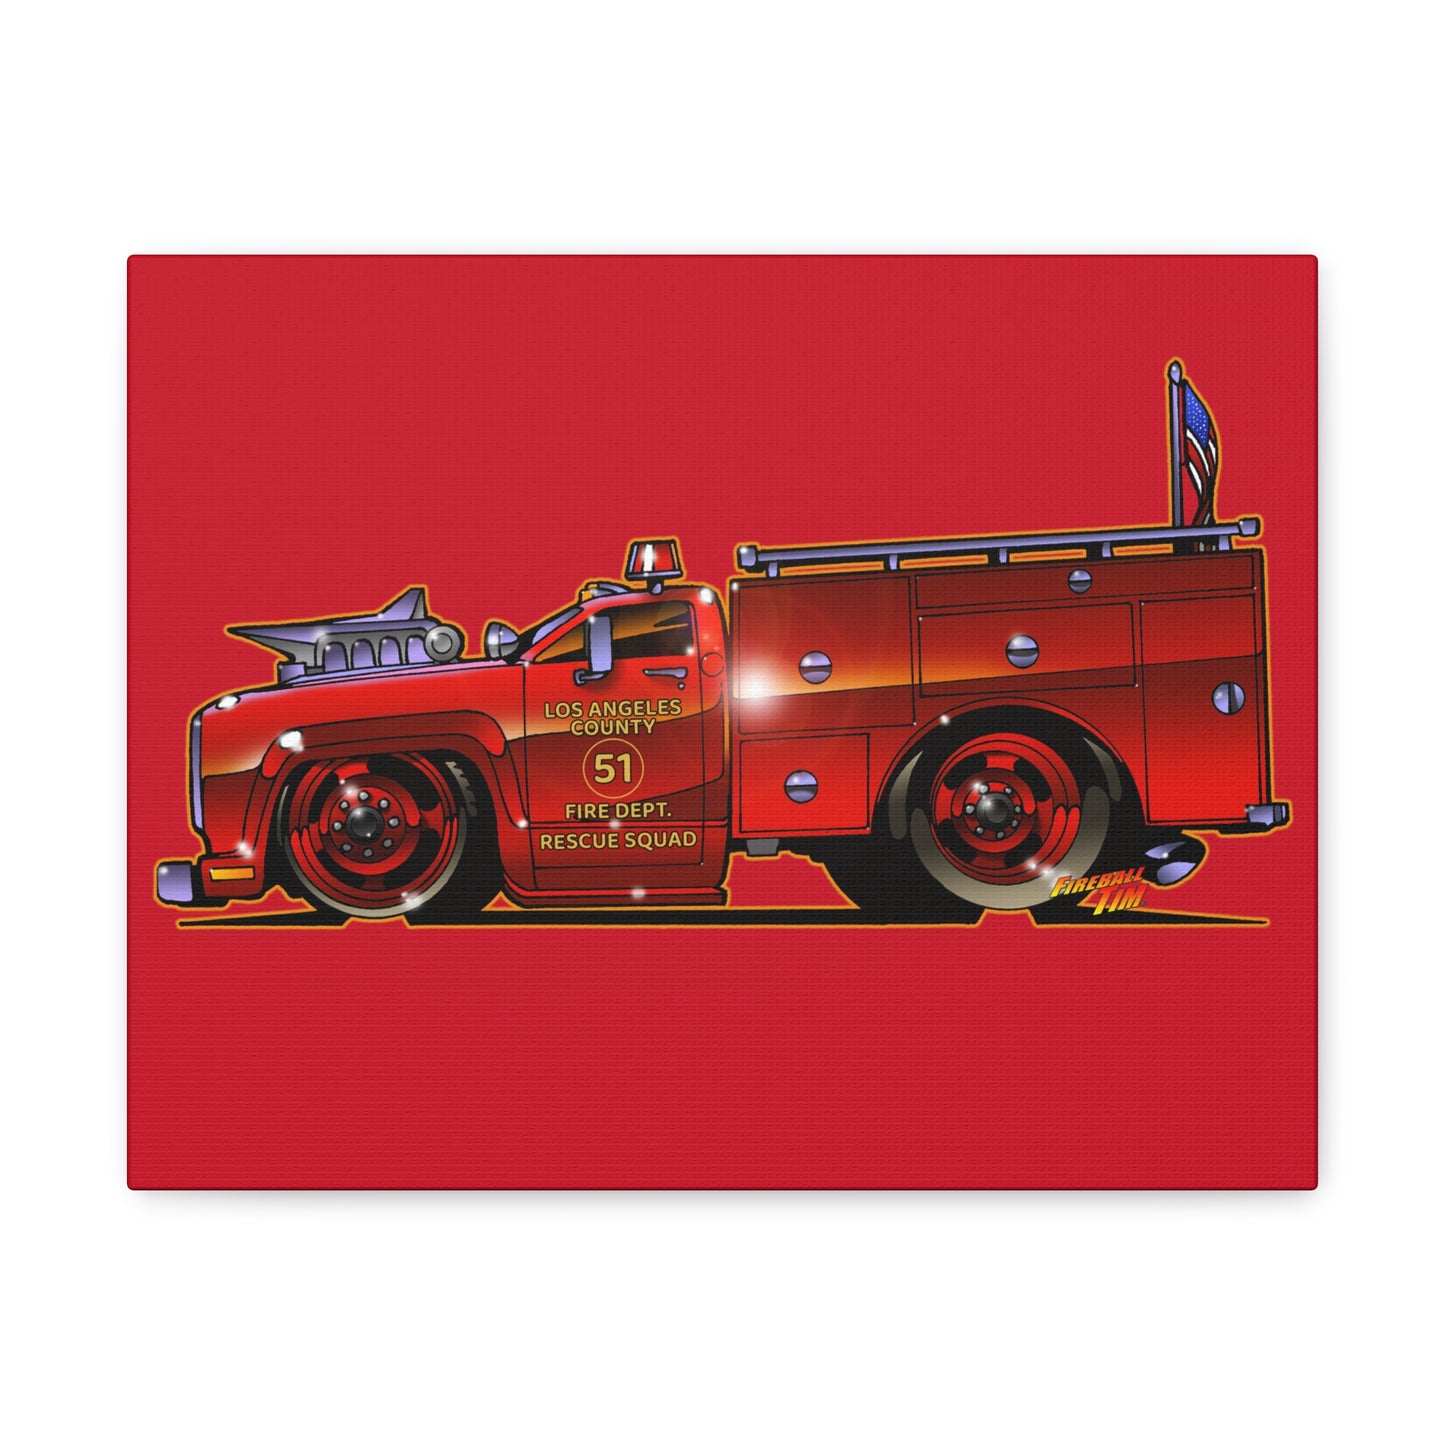 EMERGENCY SQUAD 51 Paramedic Truck Canvas Gallery Art Print 11x14